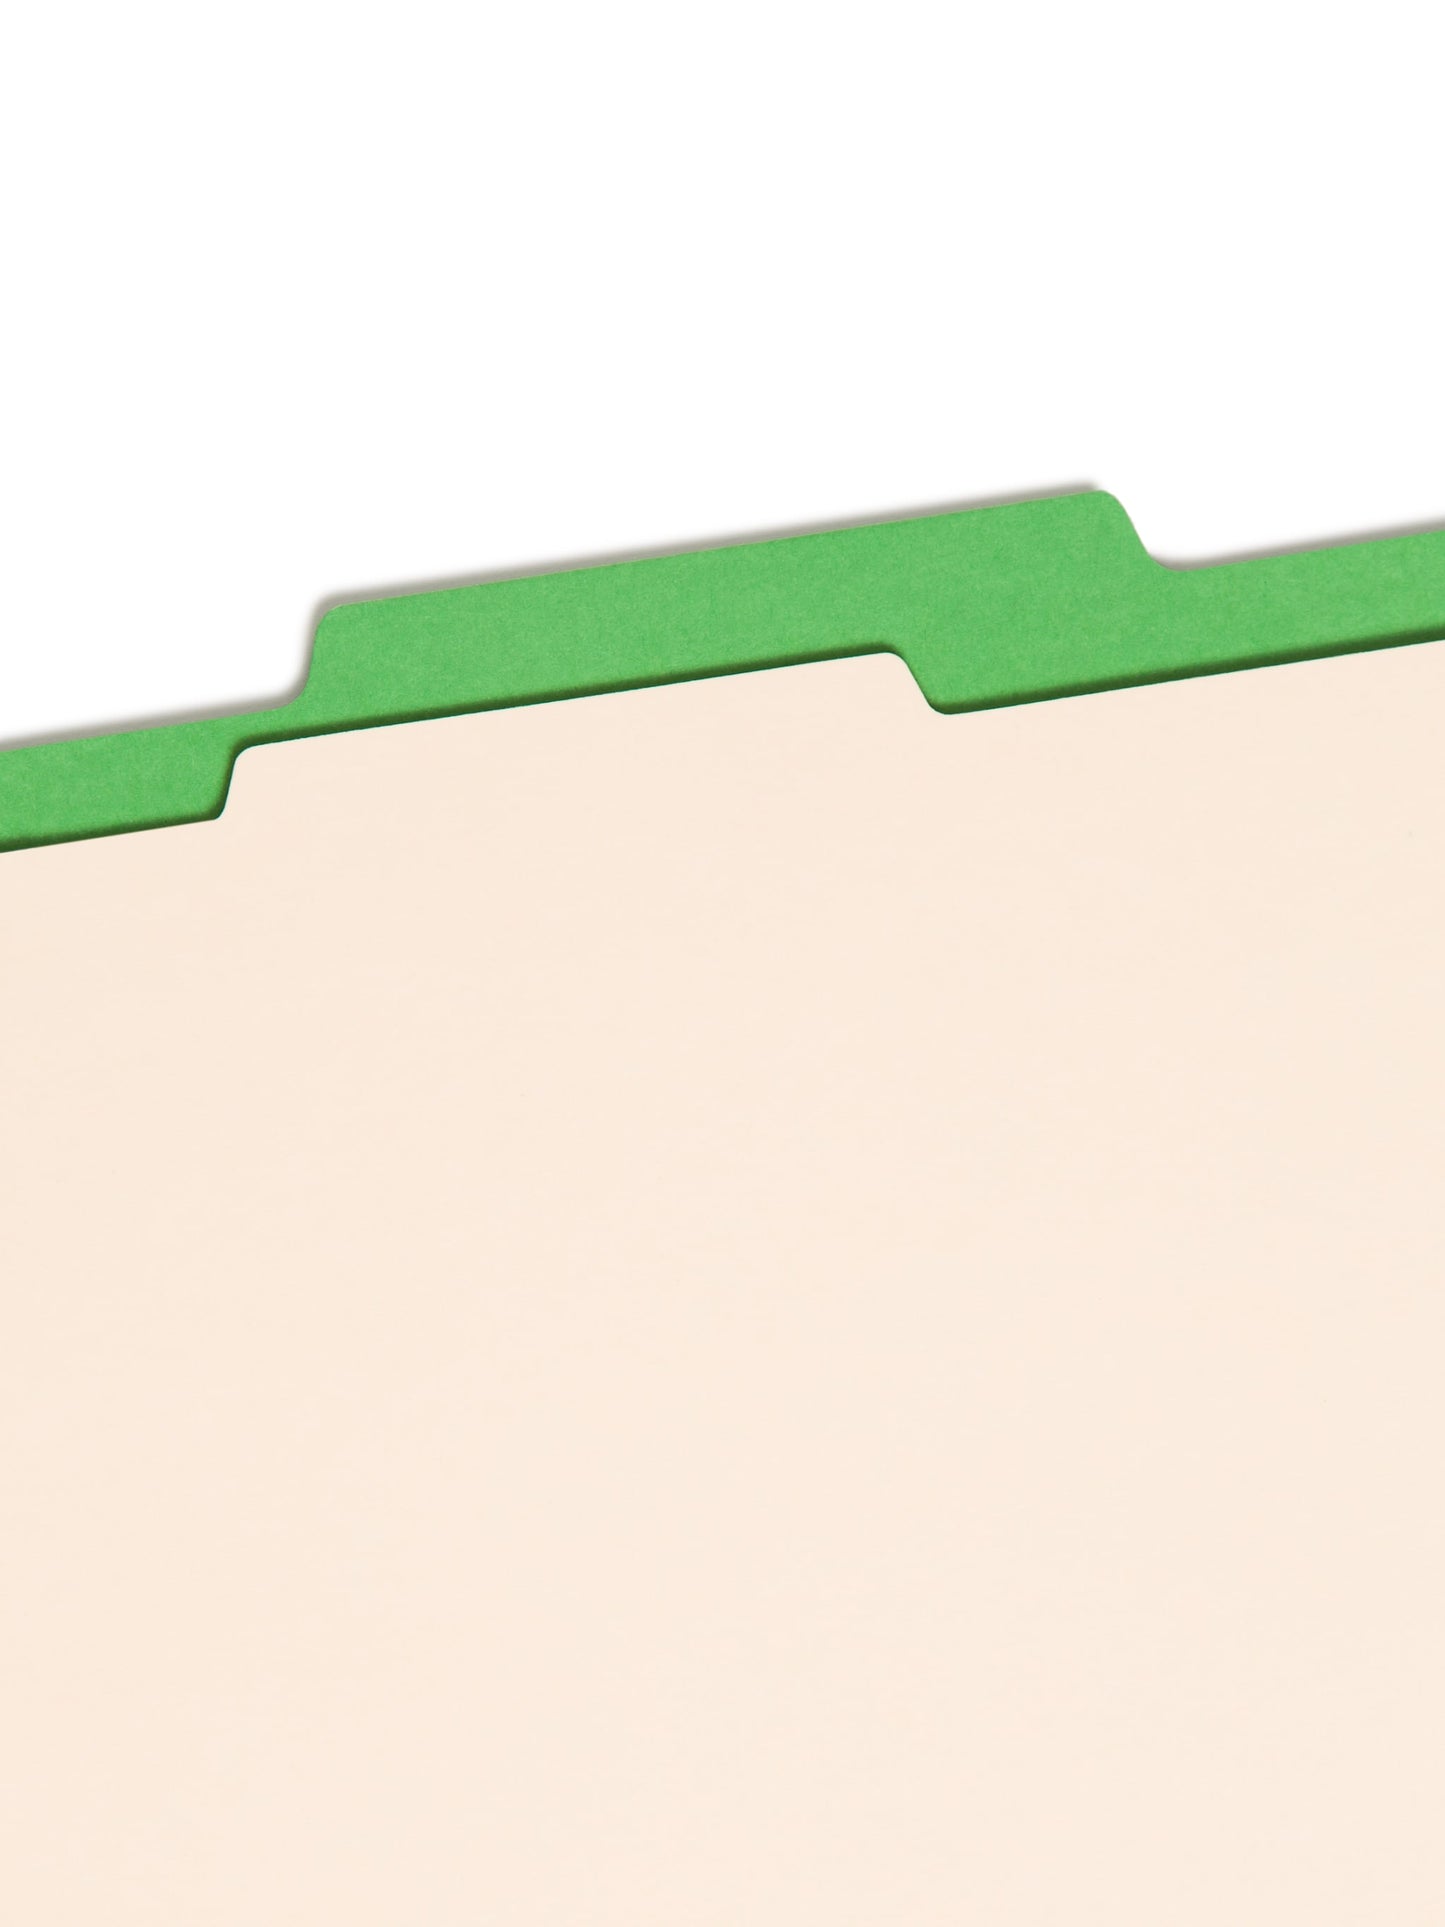 Classification File Folders, 1 Divider, 2 inch Expansion, Green Color, Letter Size, Set of 0, 30086486137028